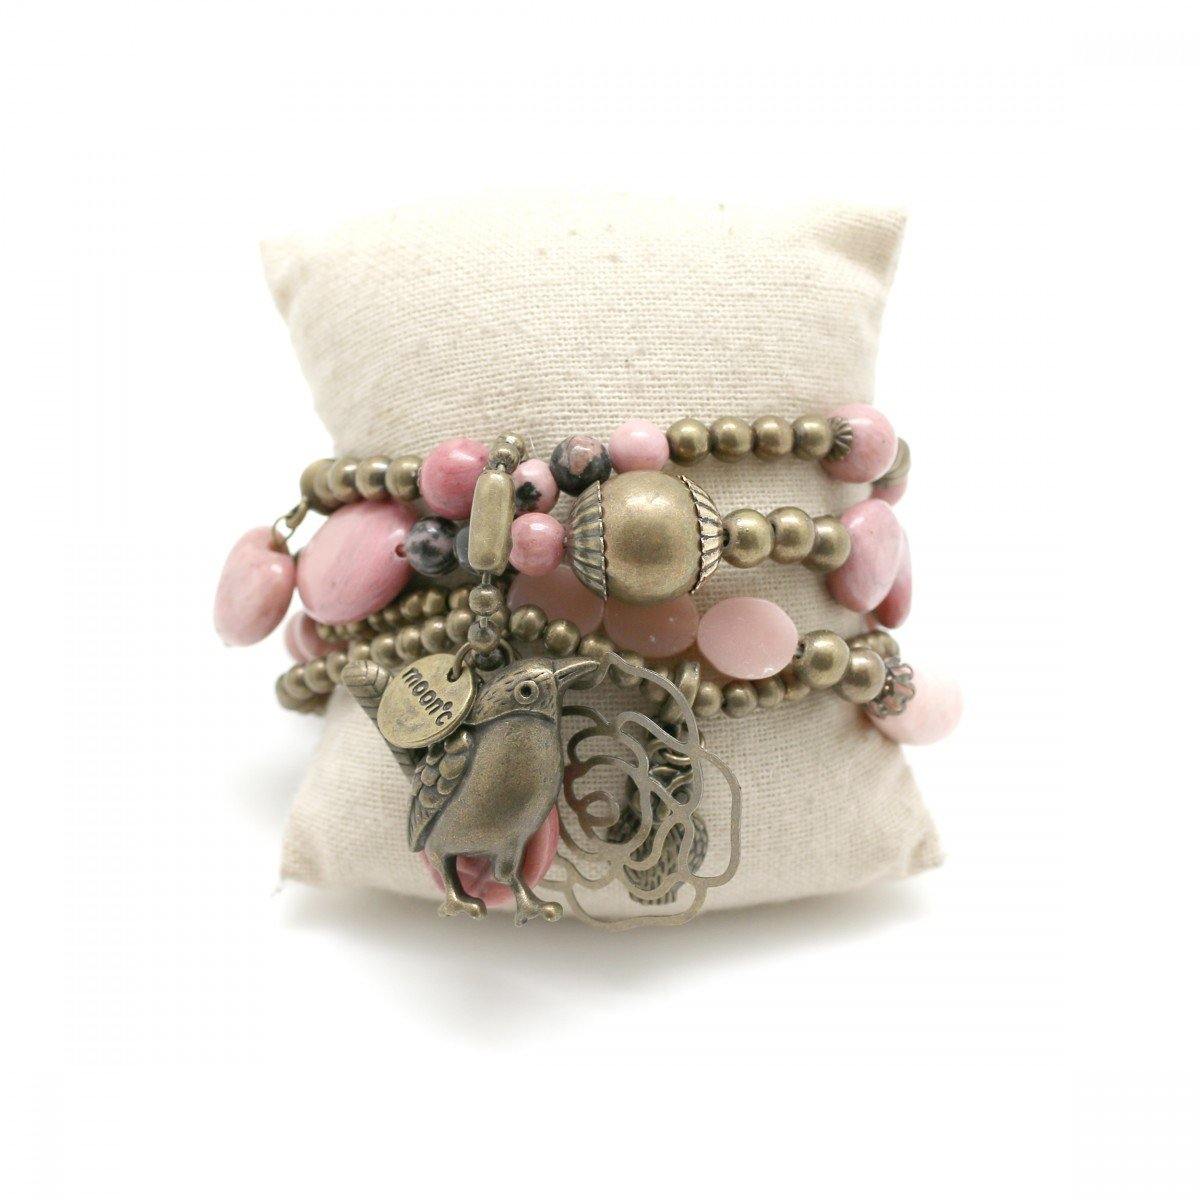 Moon C Charm Bracelet For Women / Natural Stones / Pink / Gift Idea / Fashion Jewelry / Bird, Rose - JOYasForYou